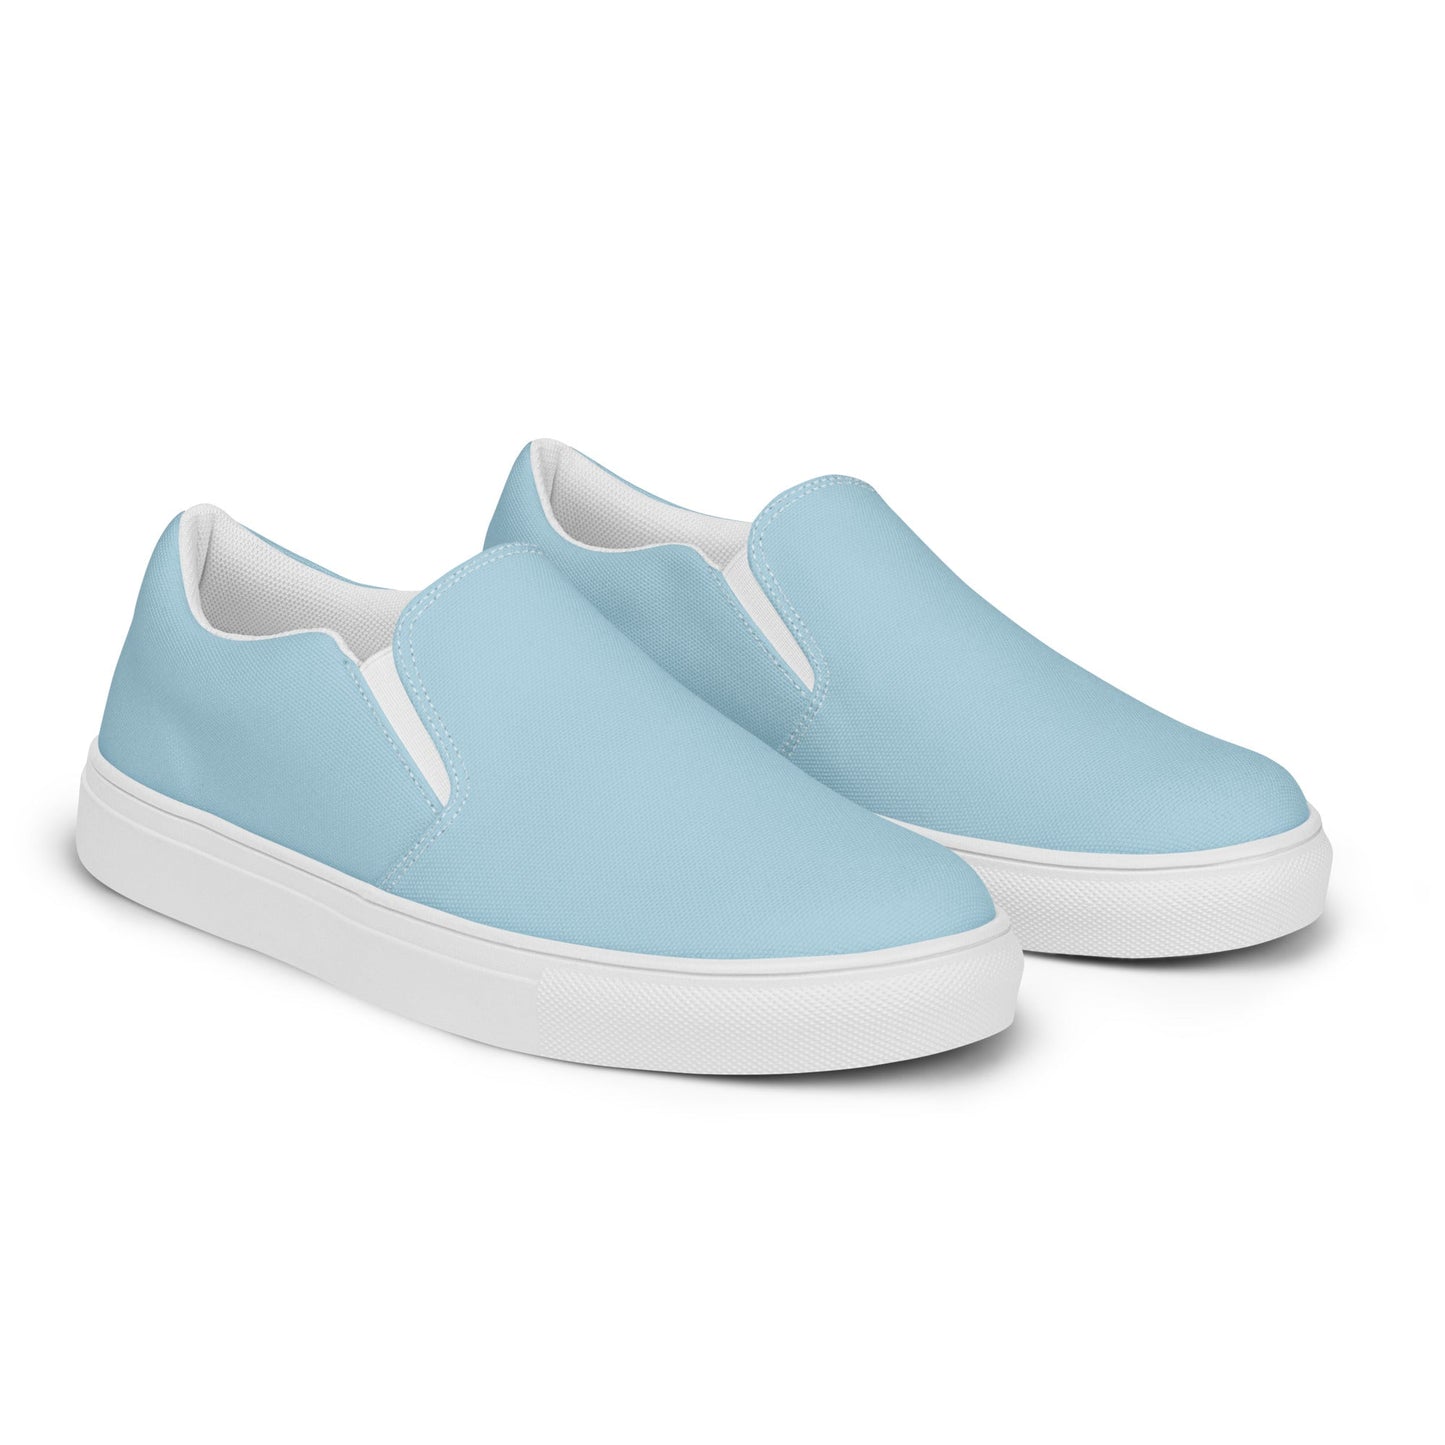 klasneakers Men’s slip-on canvas shoes - Sky Blue